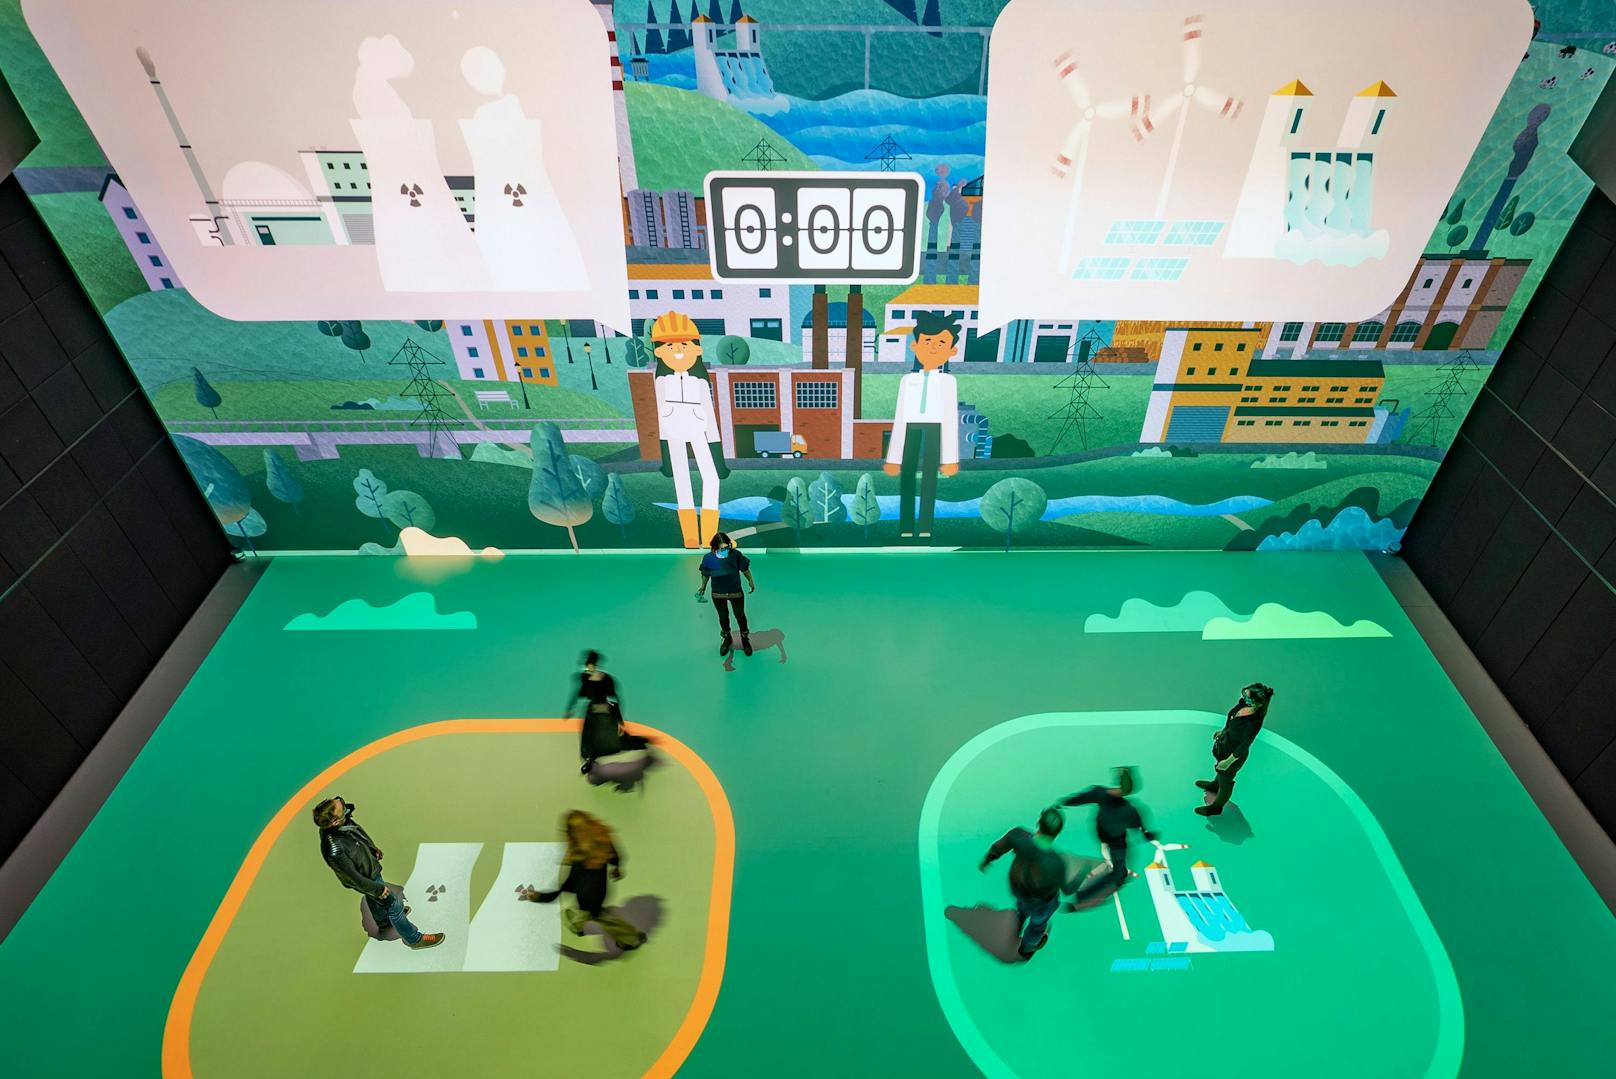 Interaktives Spiel "Planet B" im "DeepSpace" des Ars Electronica Center